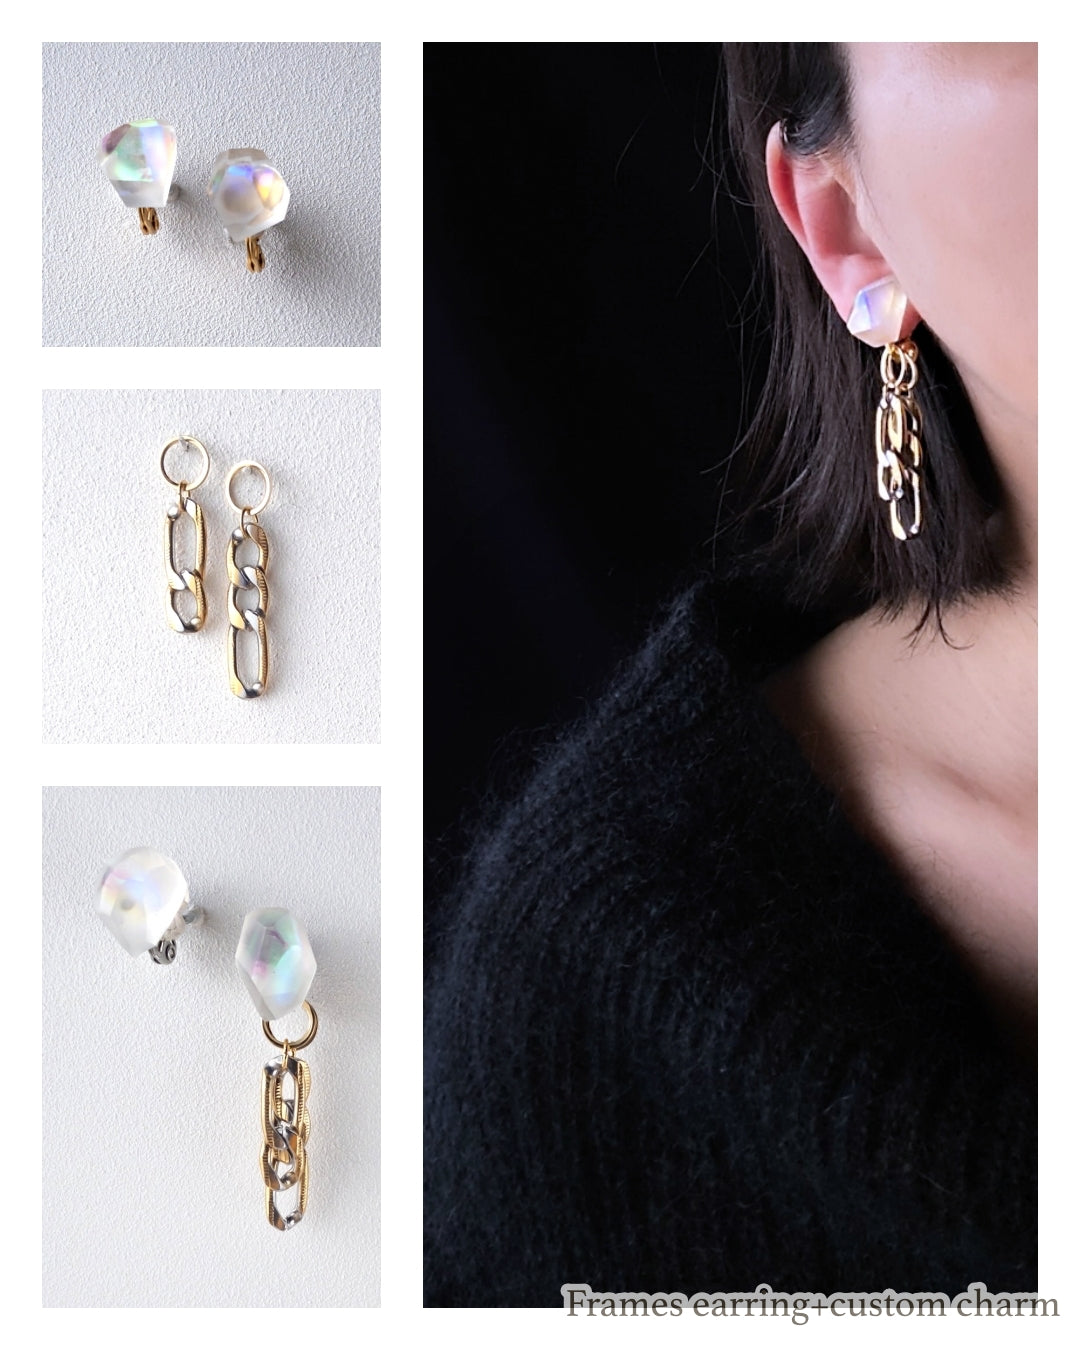 Frames earrings/crystals/Alice in wonderland_frost clear 7-b